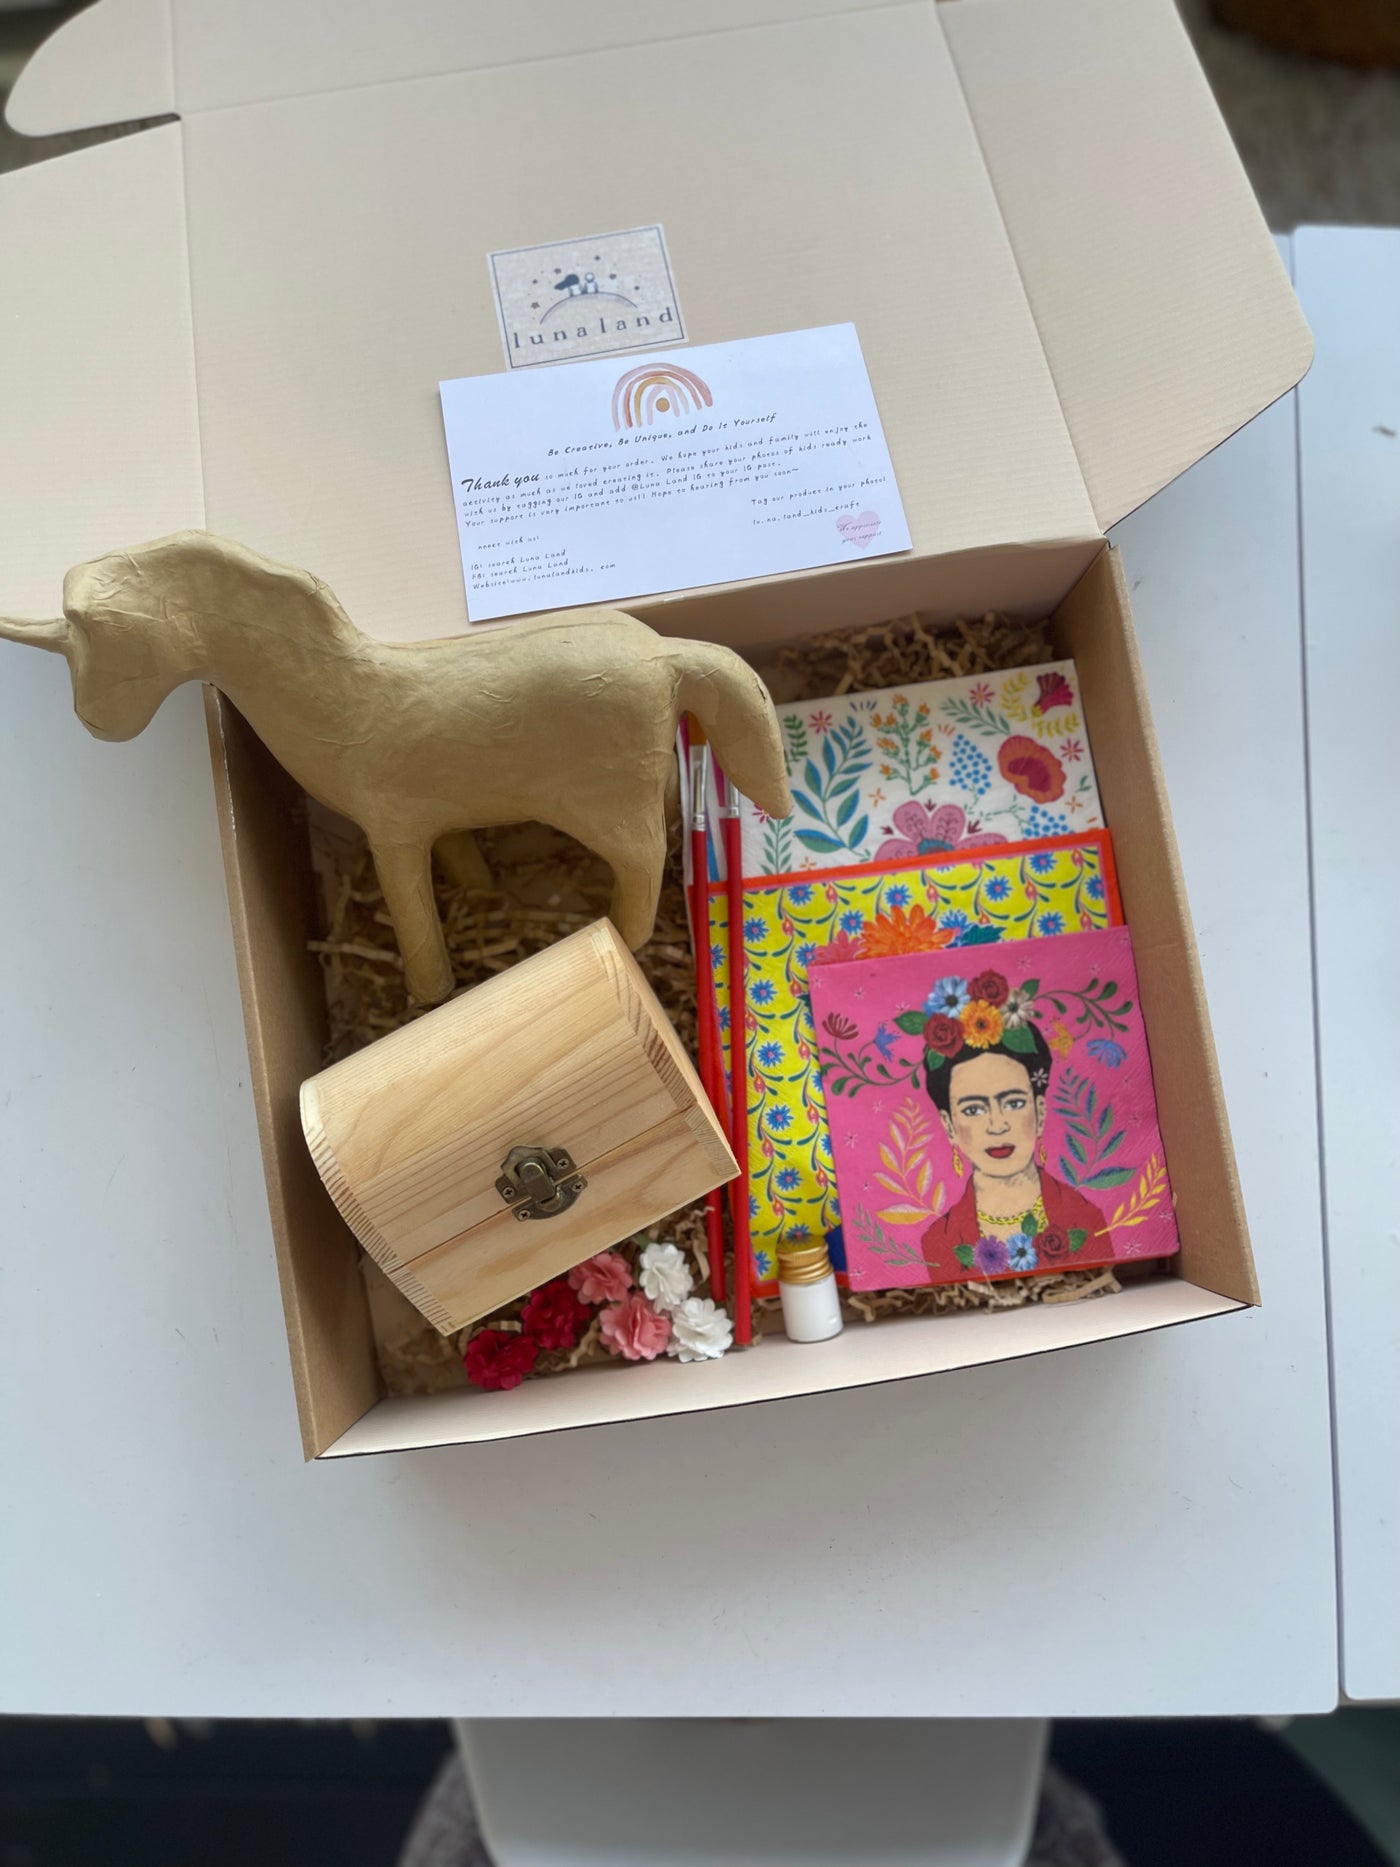 World artist theme collection (Inspired by [Artist Frida Kahlo]: create your jewlery box & unicorn artwork